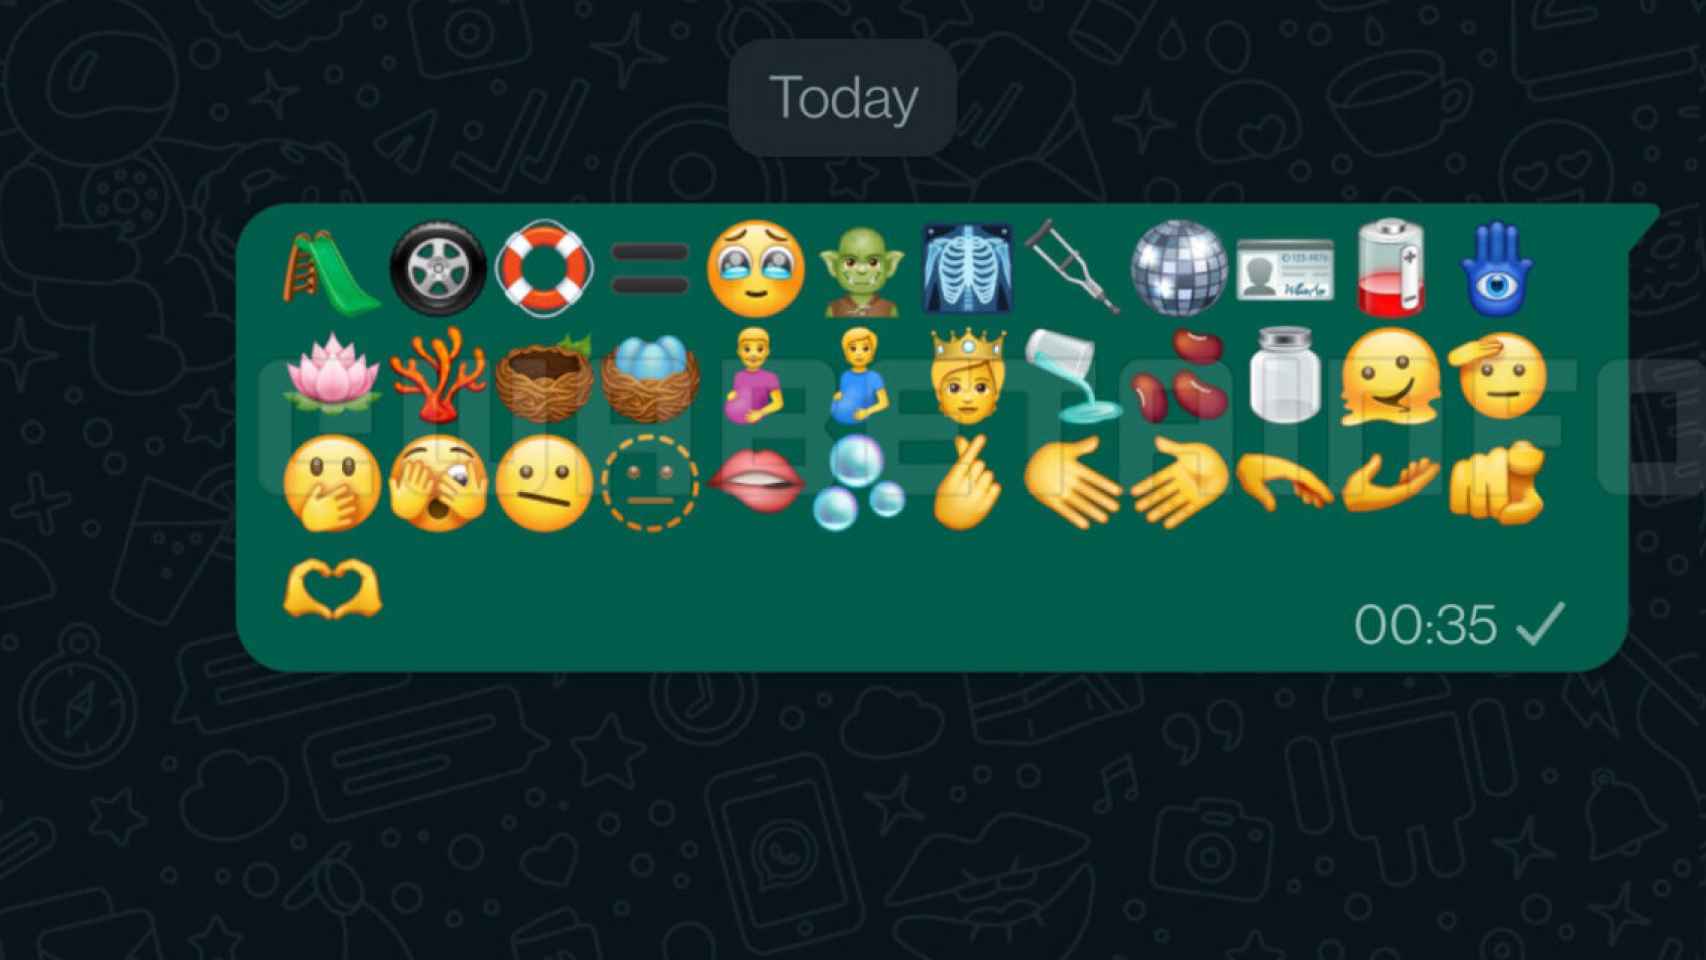 Nuevos emojis de WhatsApp